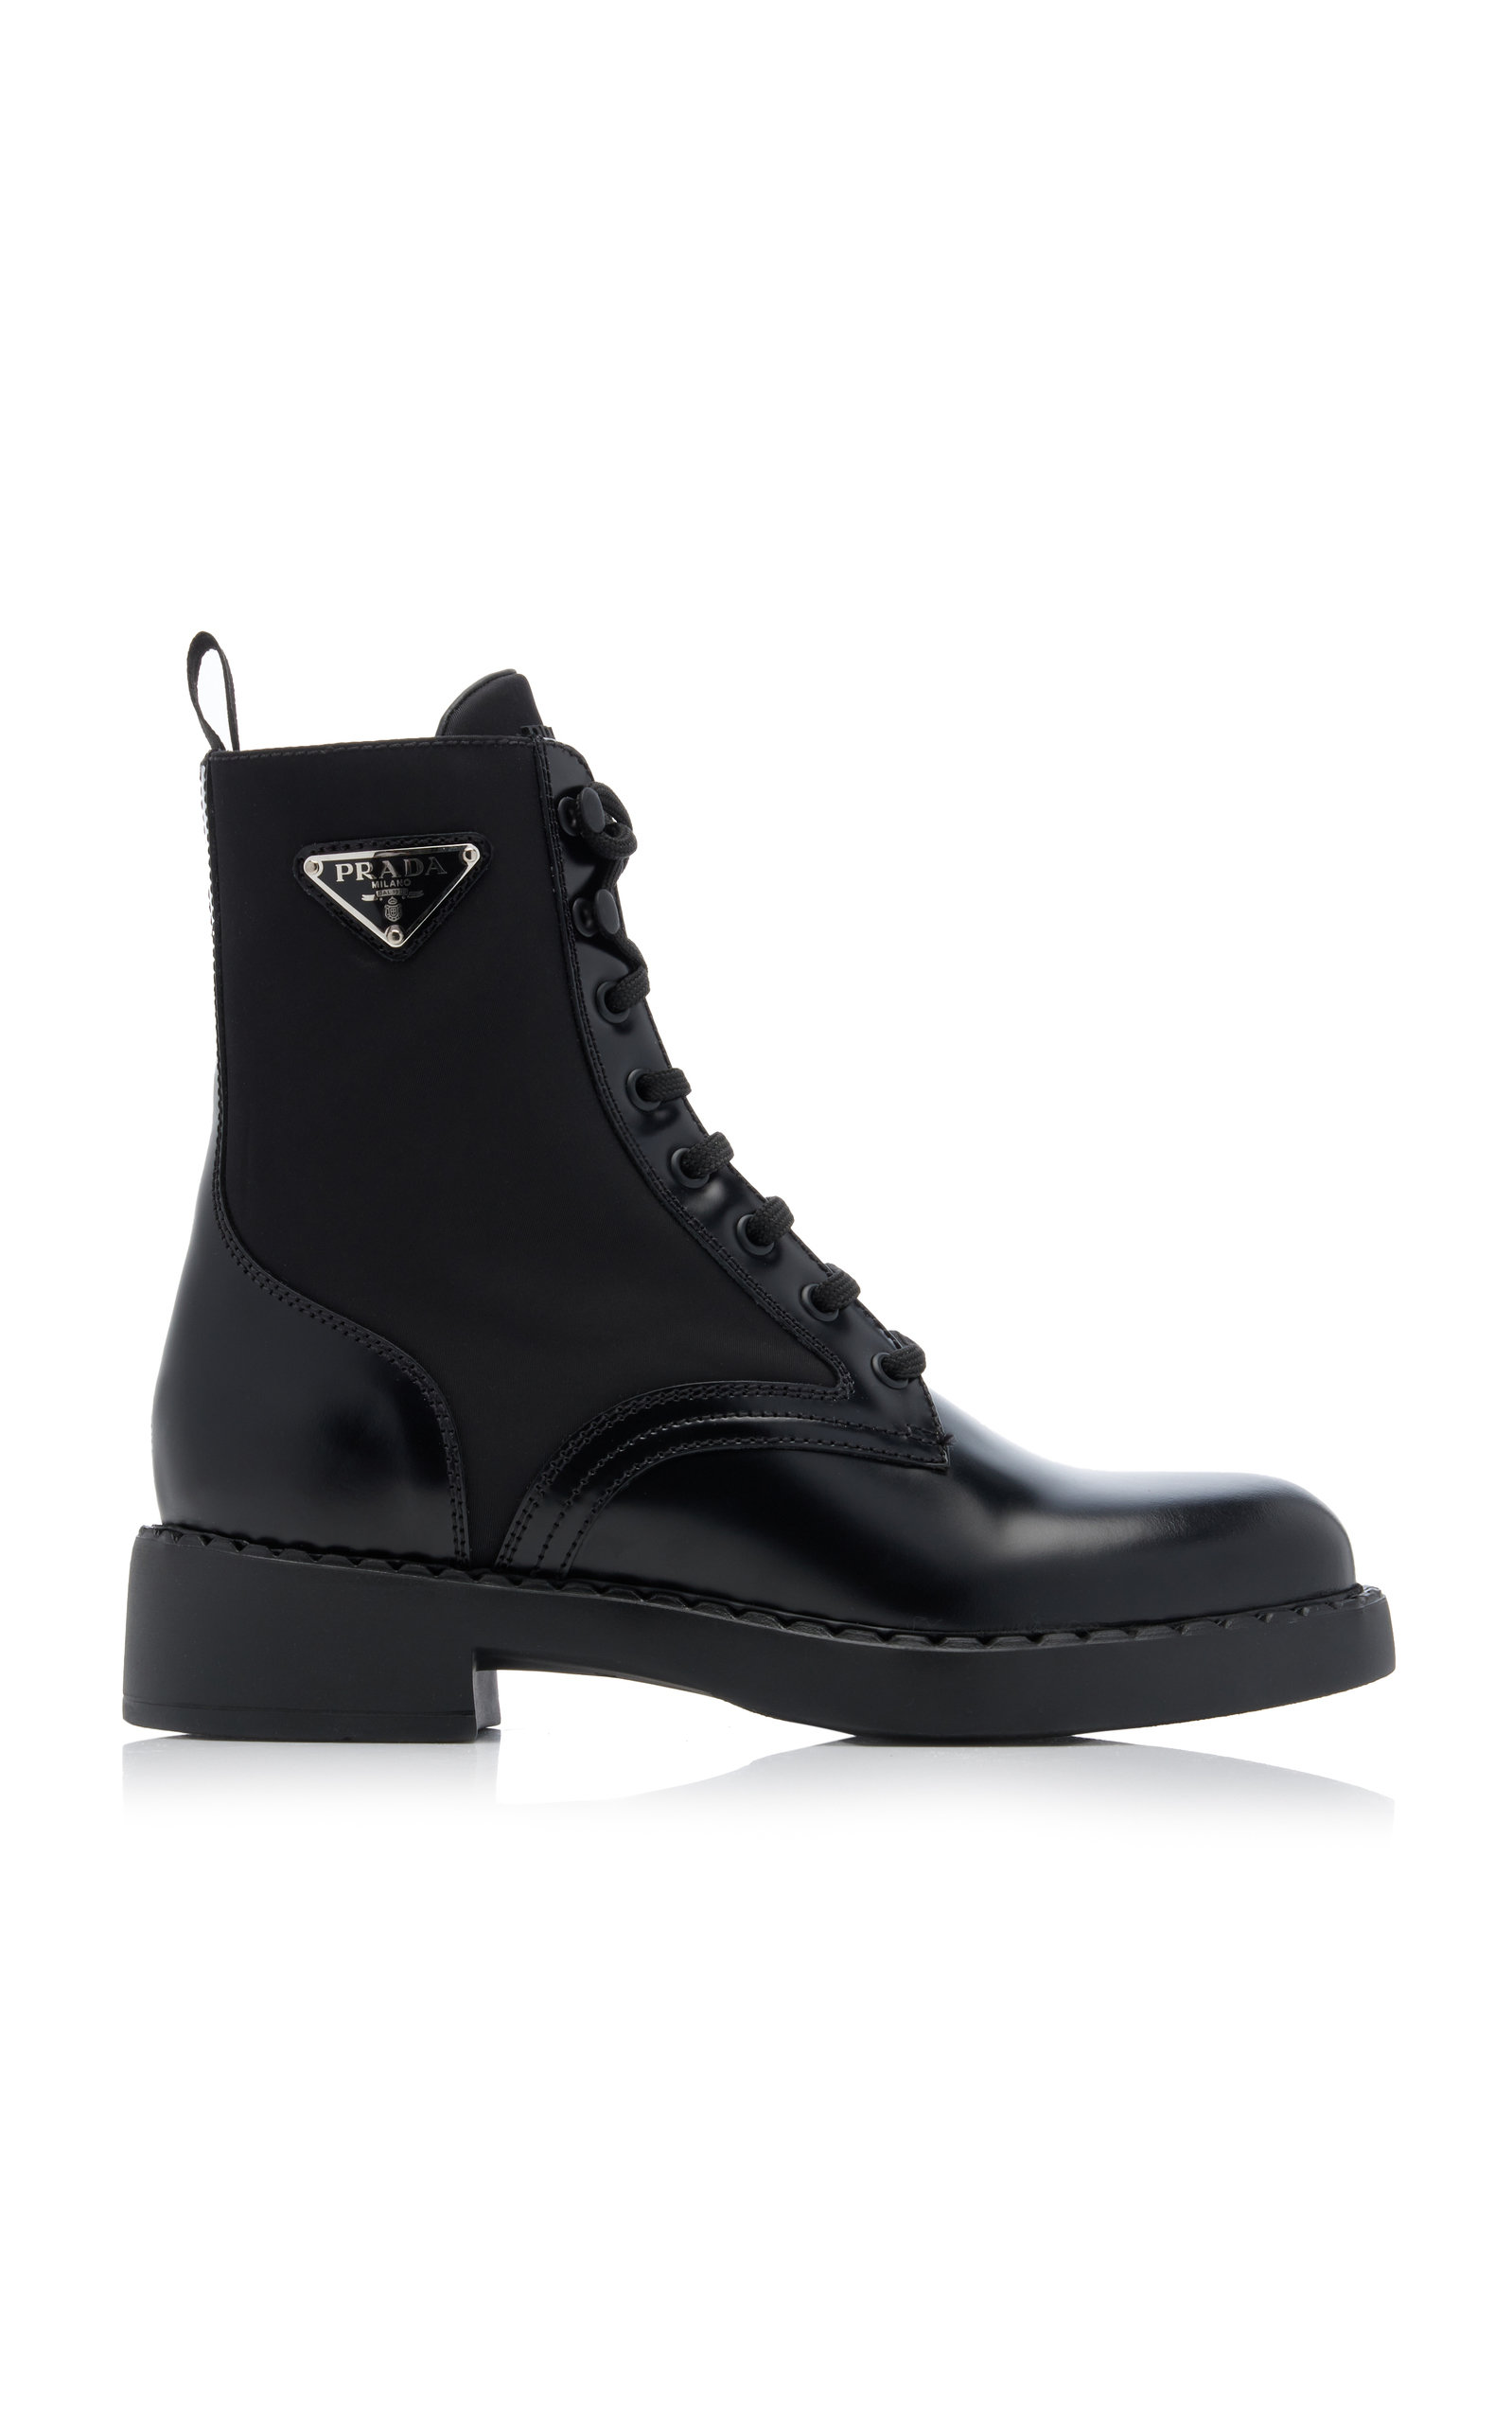 Prada - Women's Re-Nylon and Leather Combat Boots - Black - Moda Operandi